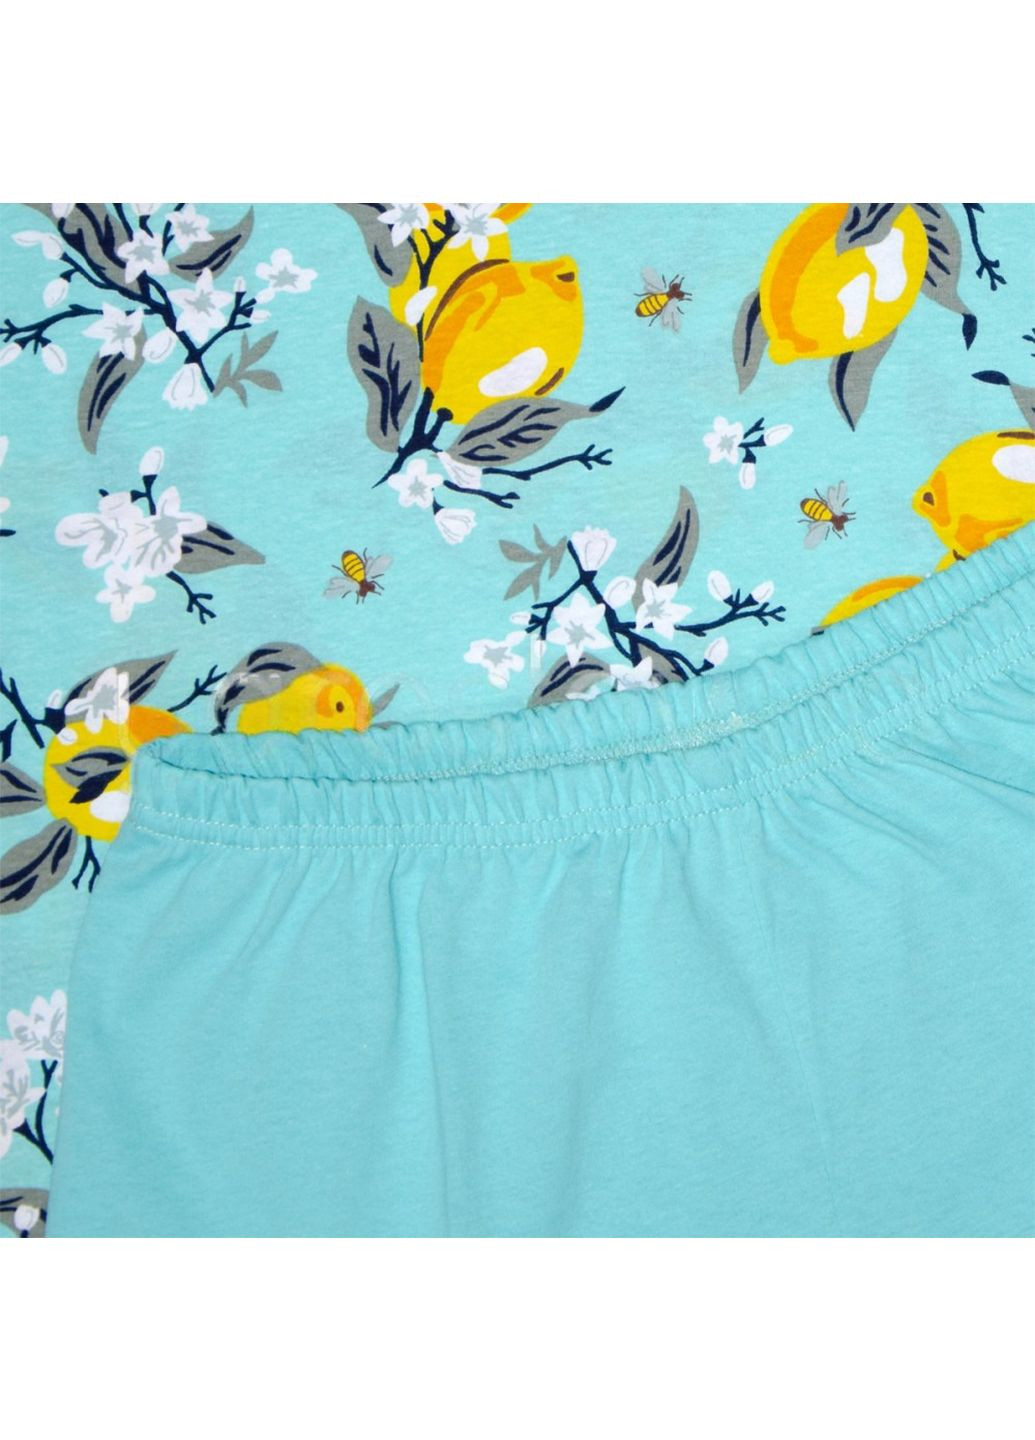 Бирюзовая всесезон пижама м.448/1 лимон футболка + шорты Ярослав